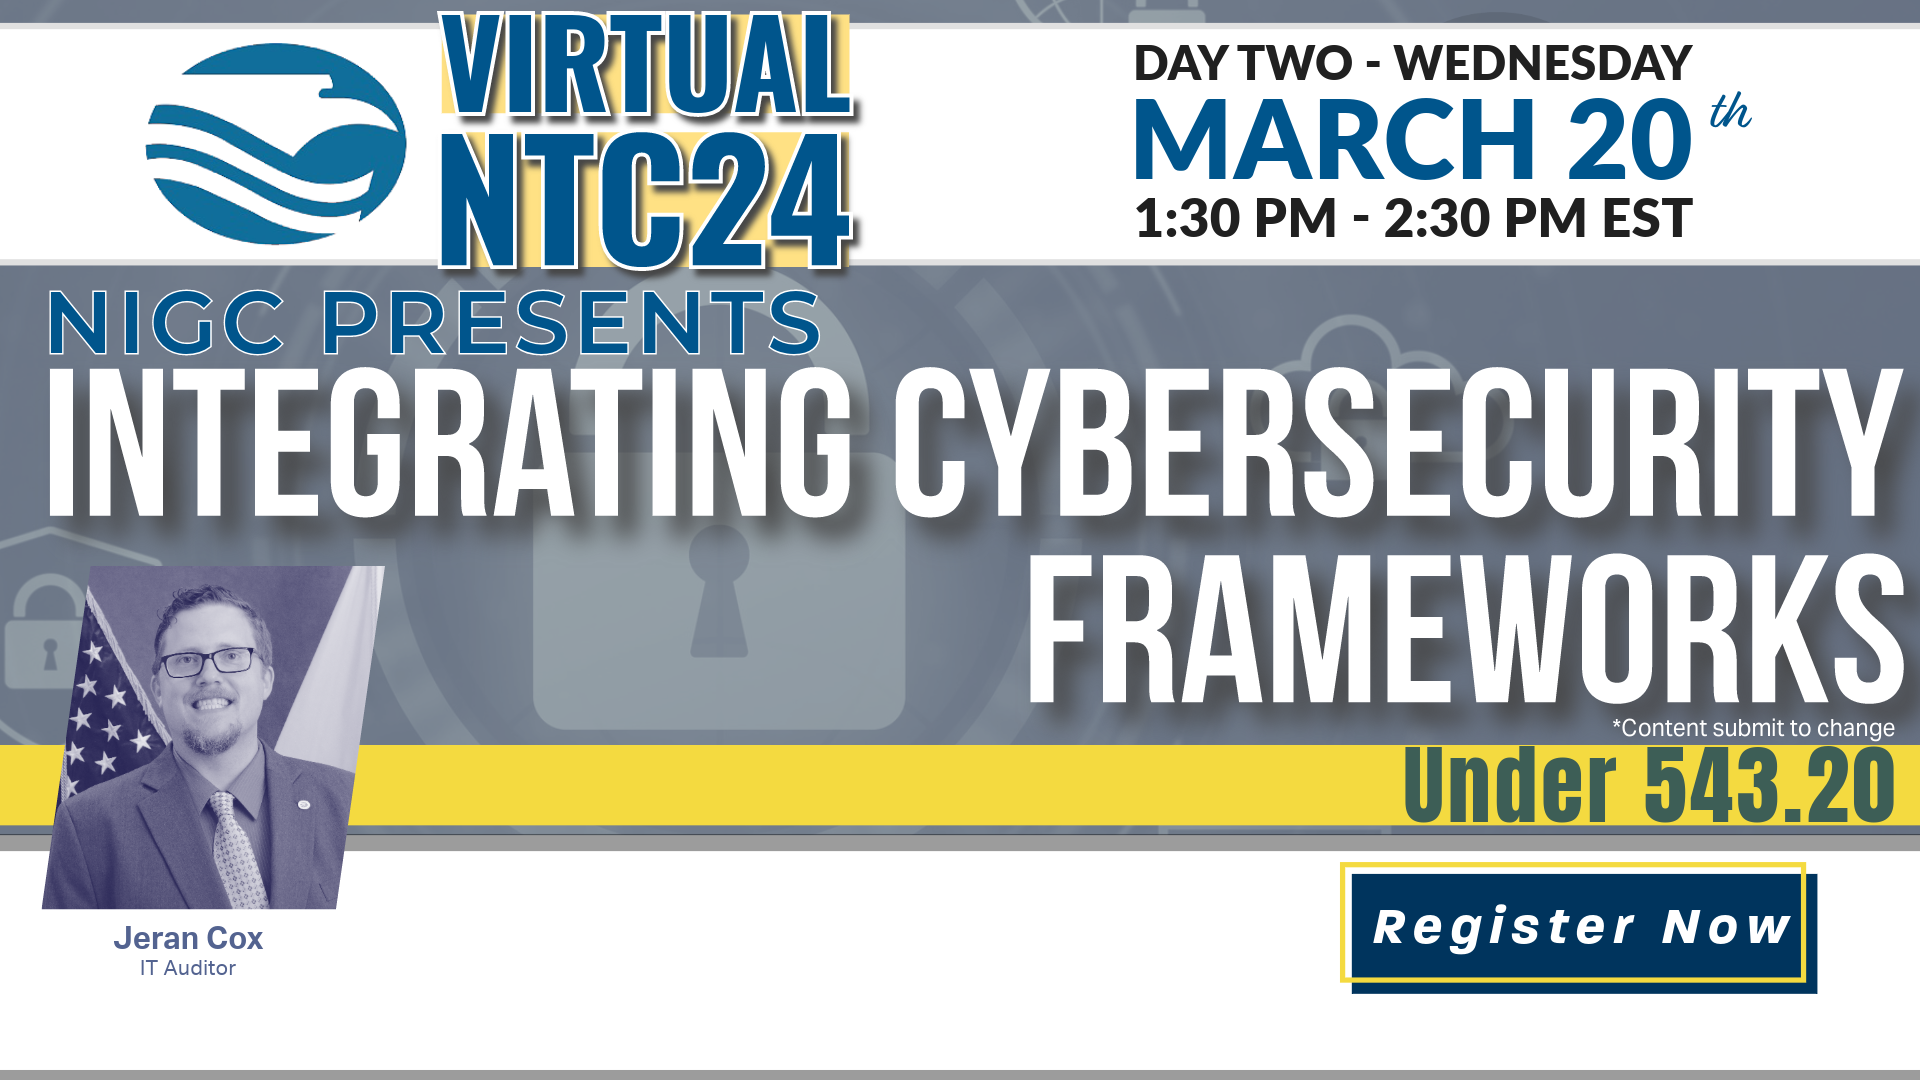 Virtual NTC24: Integrating Cybersecurity frameworks under 543.20